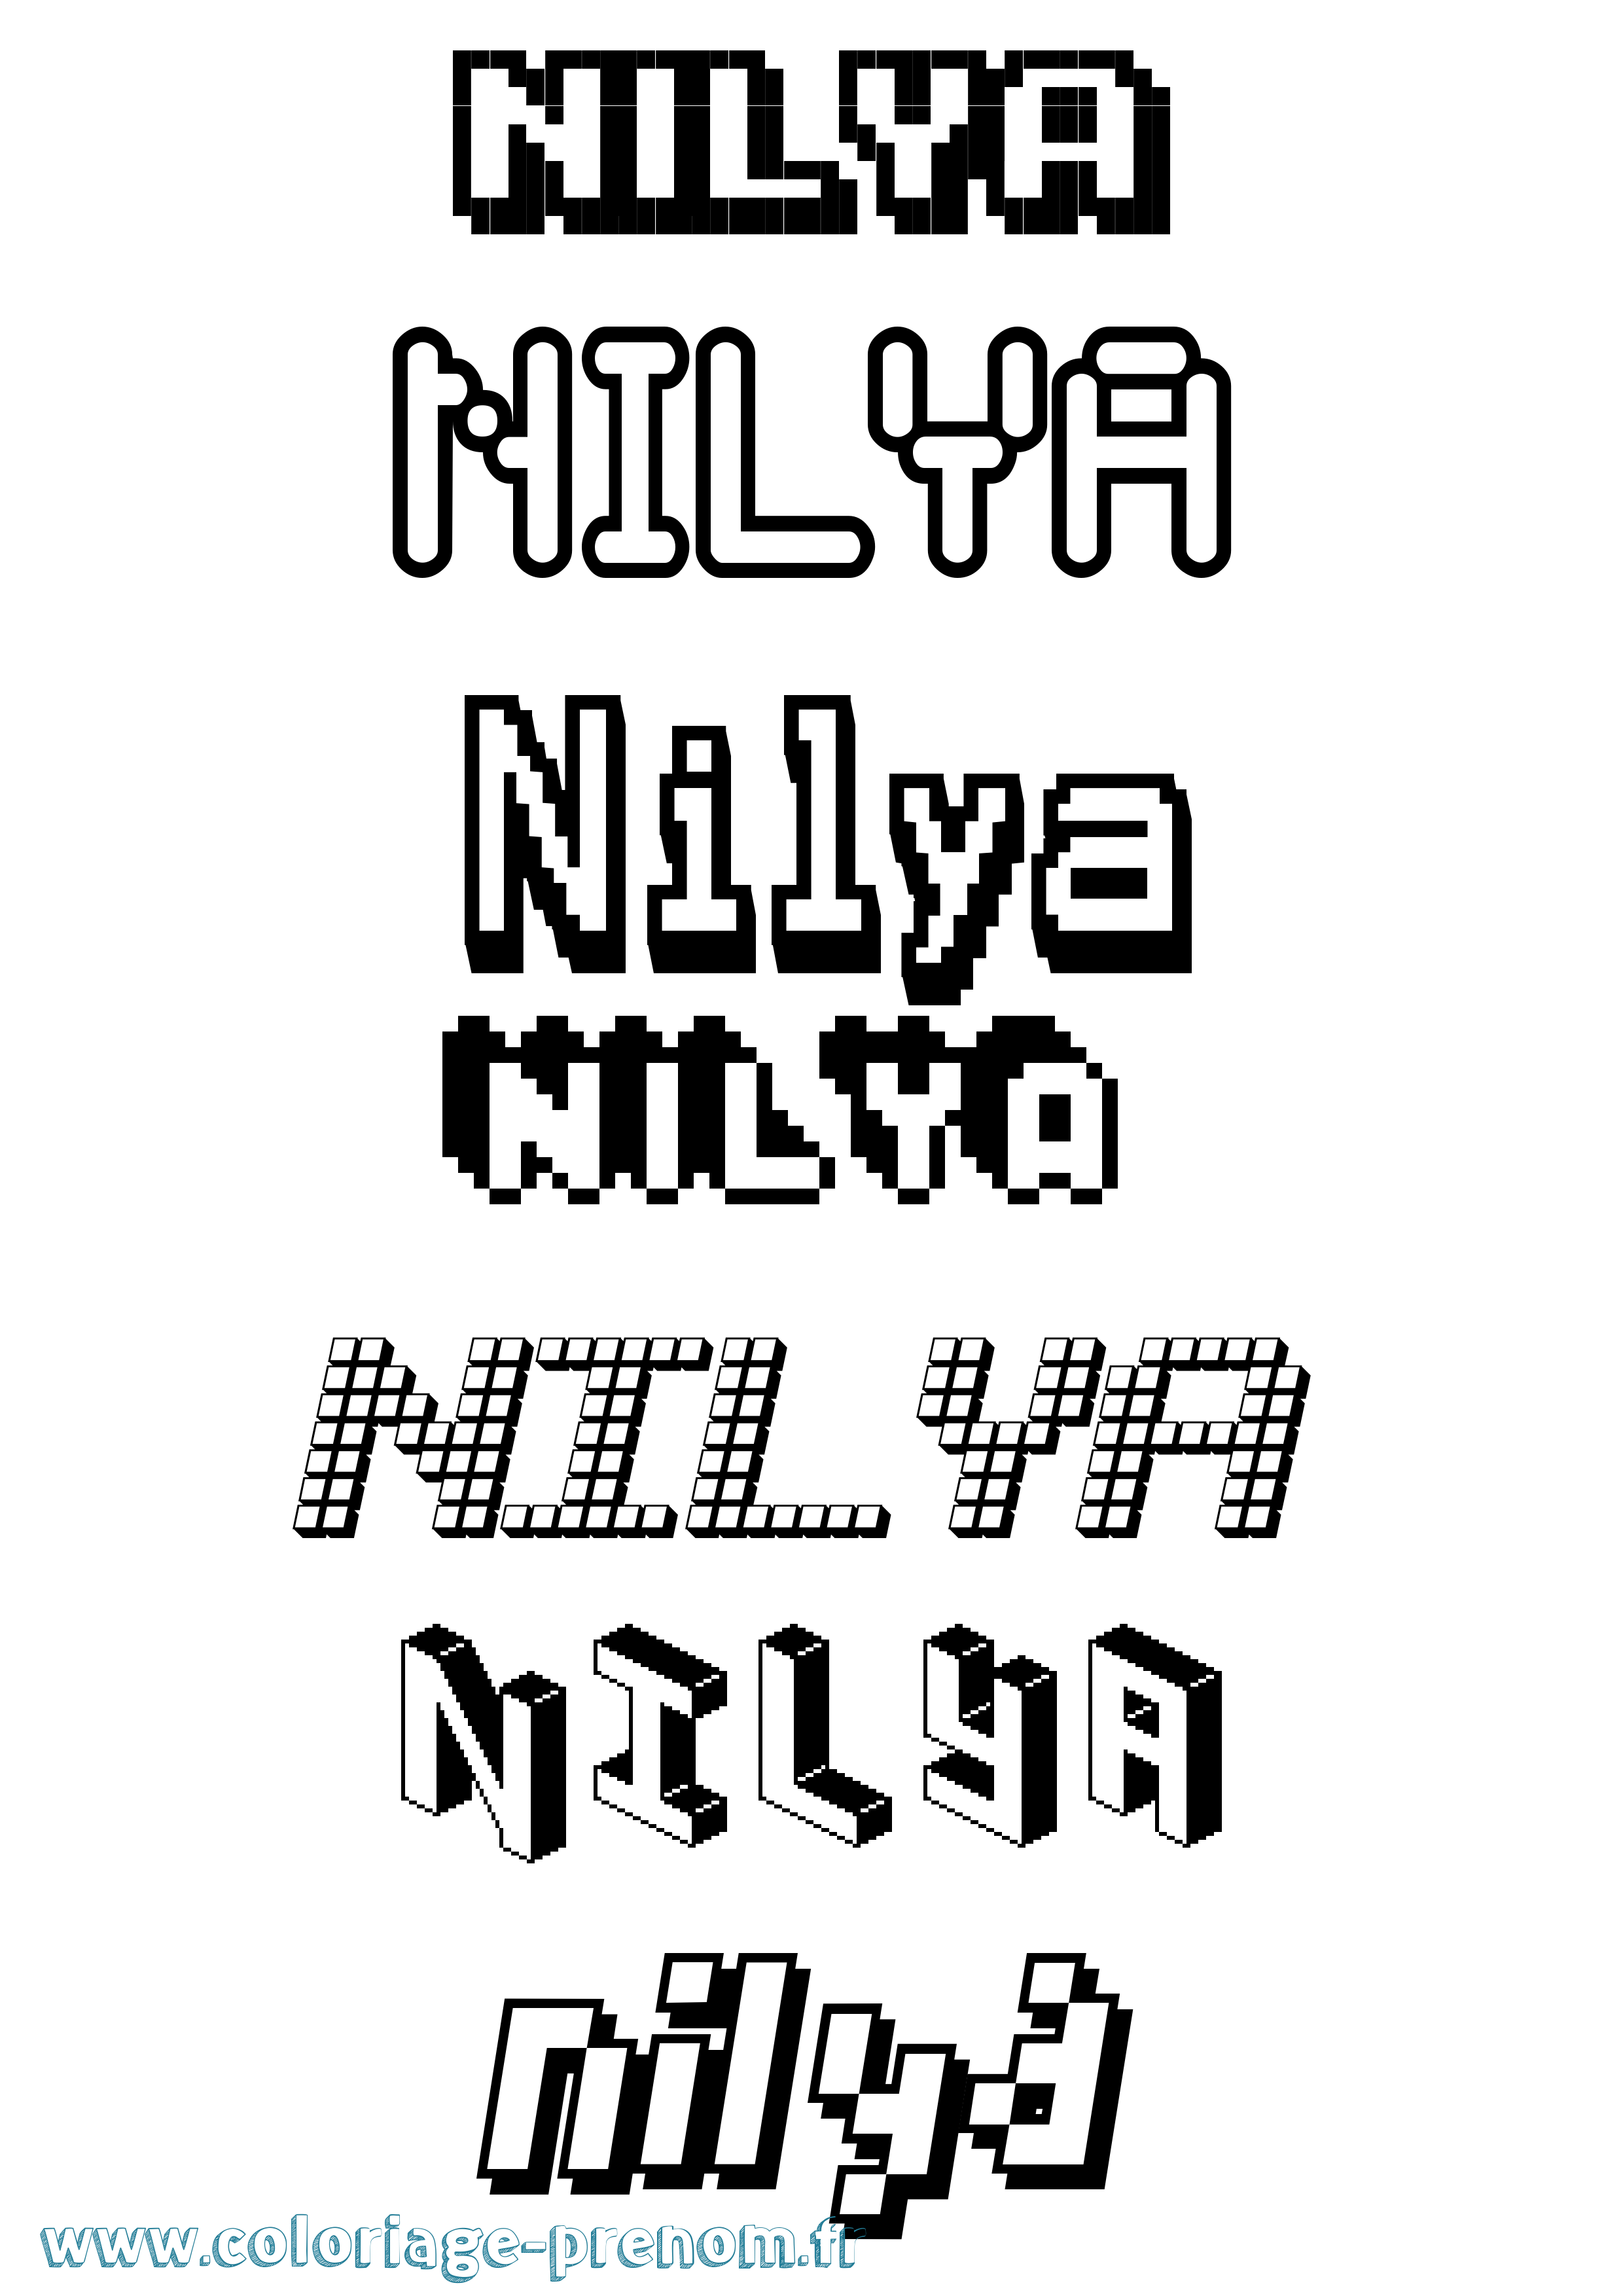 Coloriage prénom Nilya Pixel